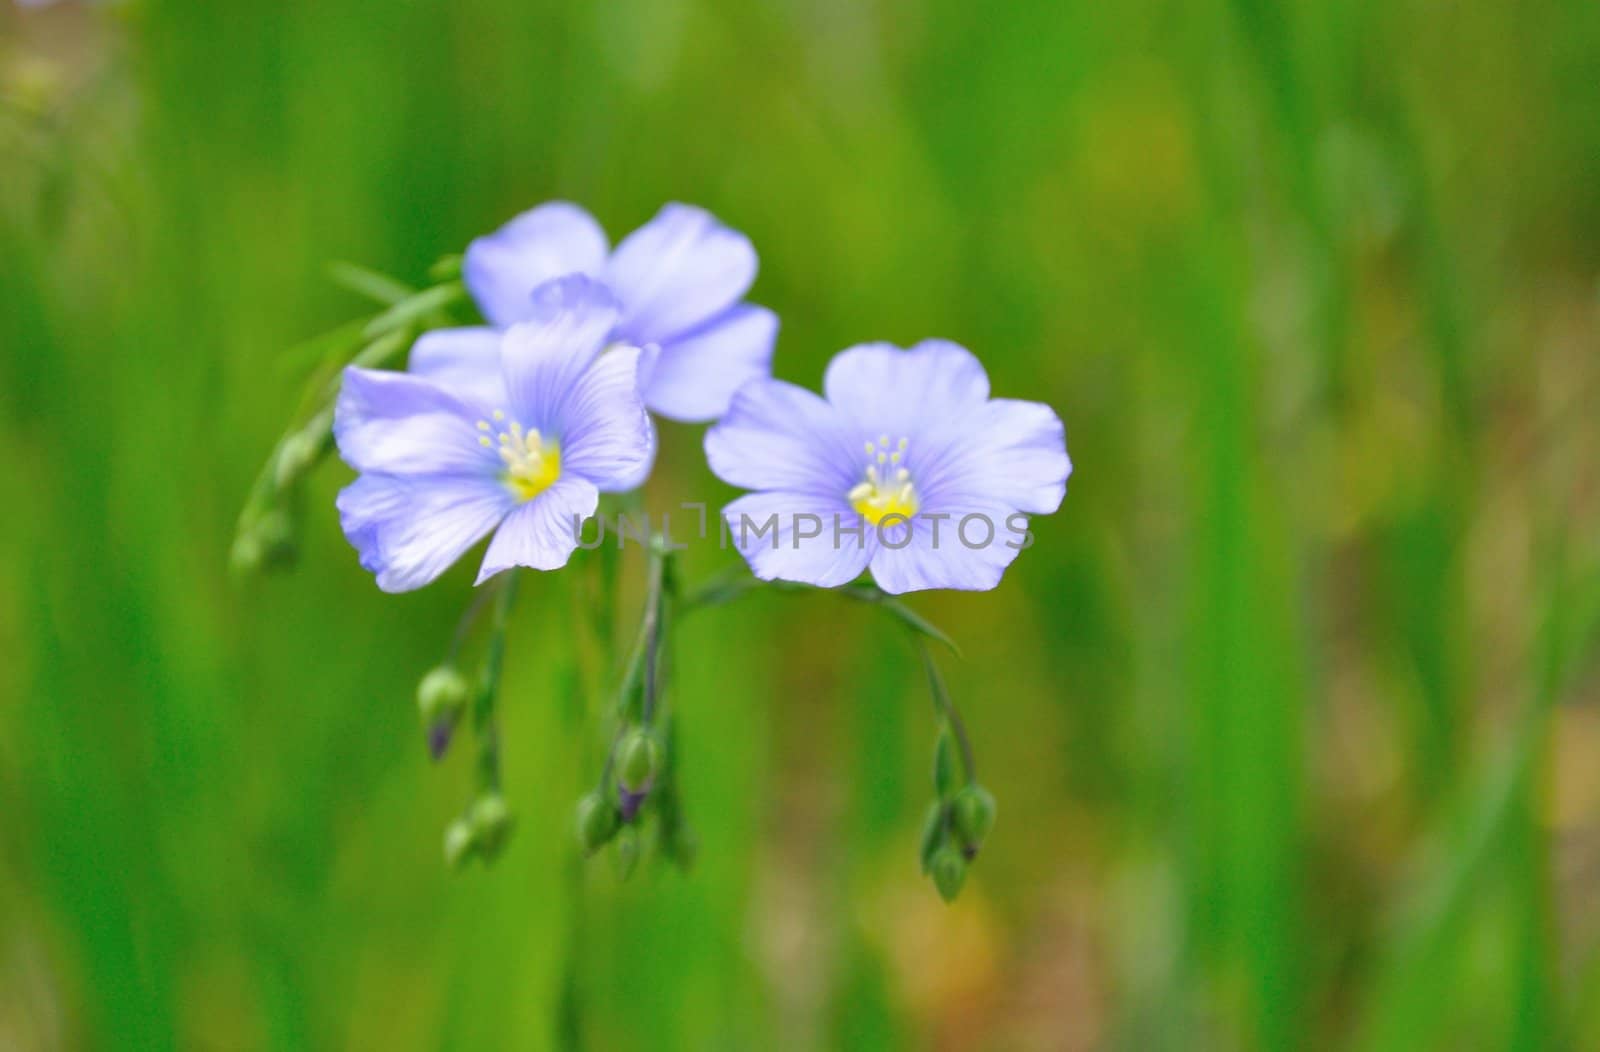 Three Little Purple Flowers by gilmourbto2001